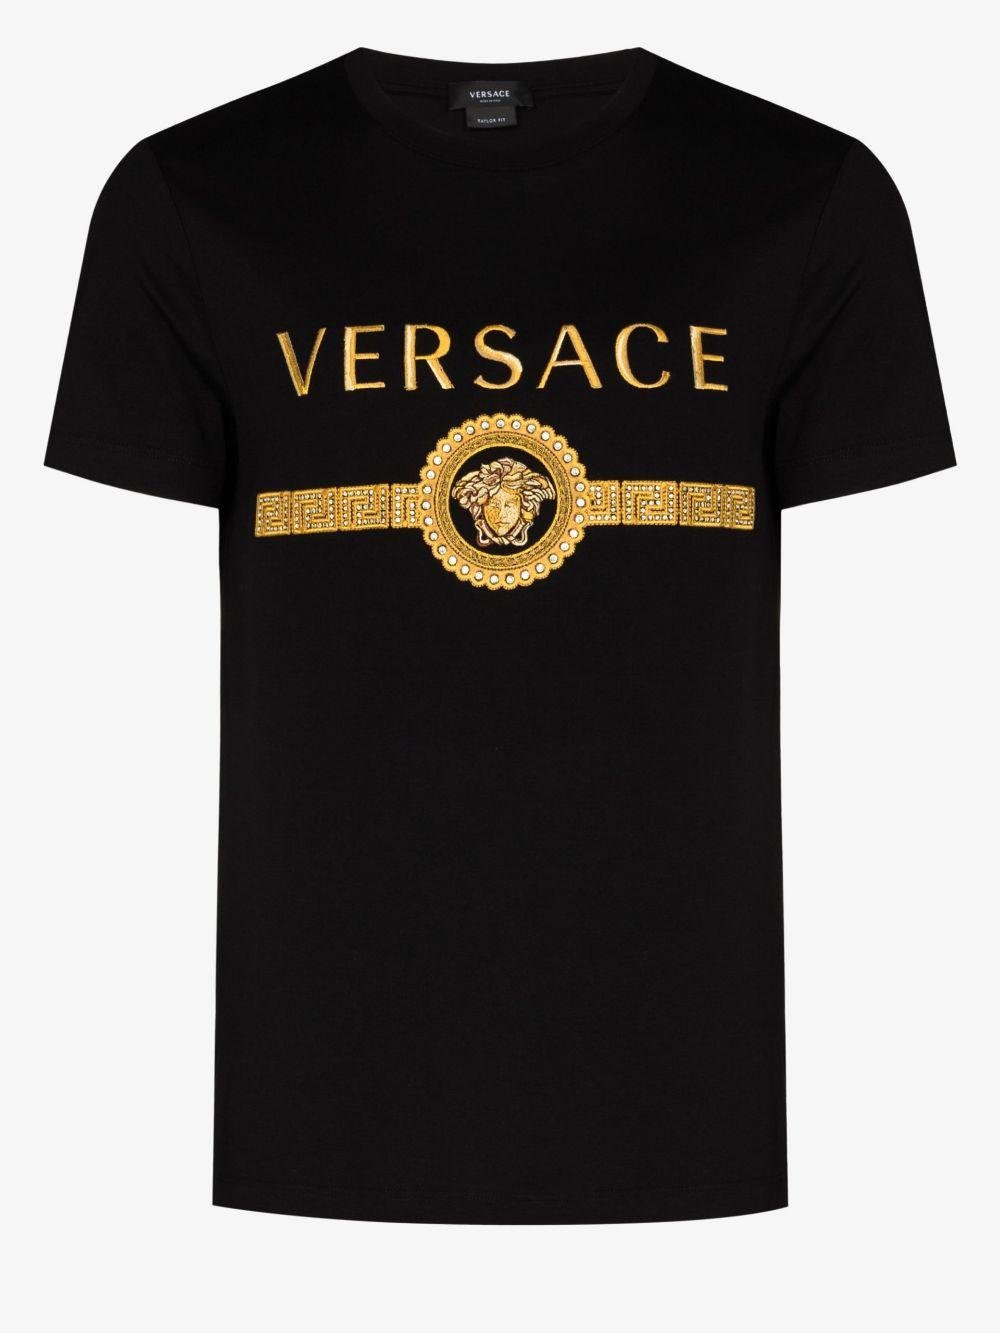 Versace Logo Print Cotton T-shirt in Black for Men - Lyst